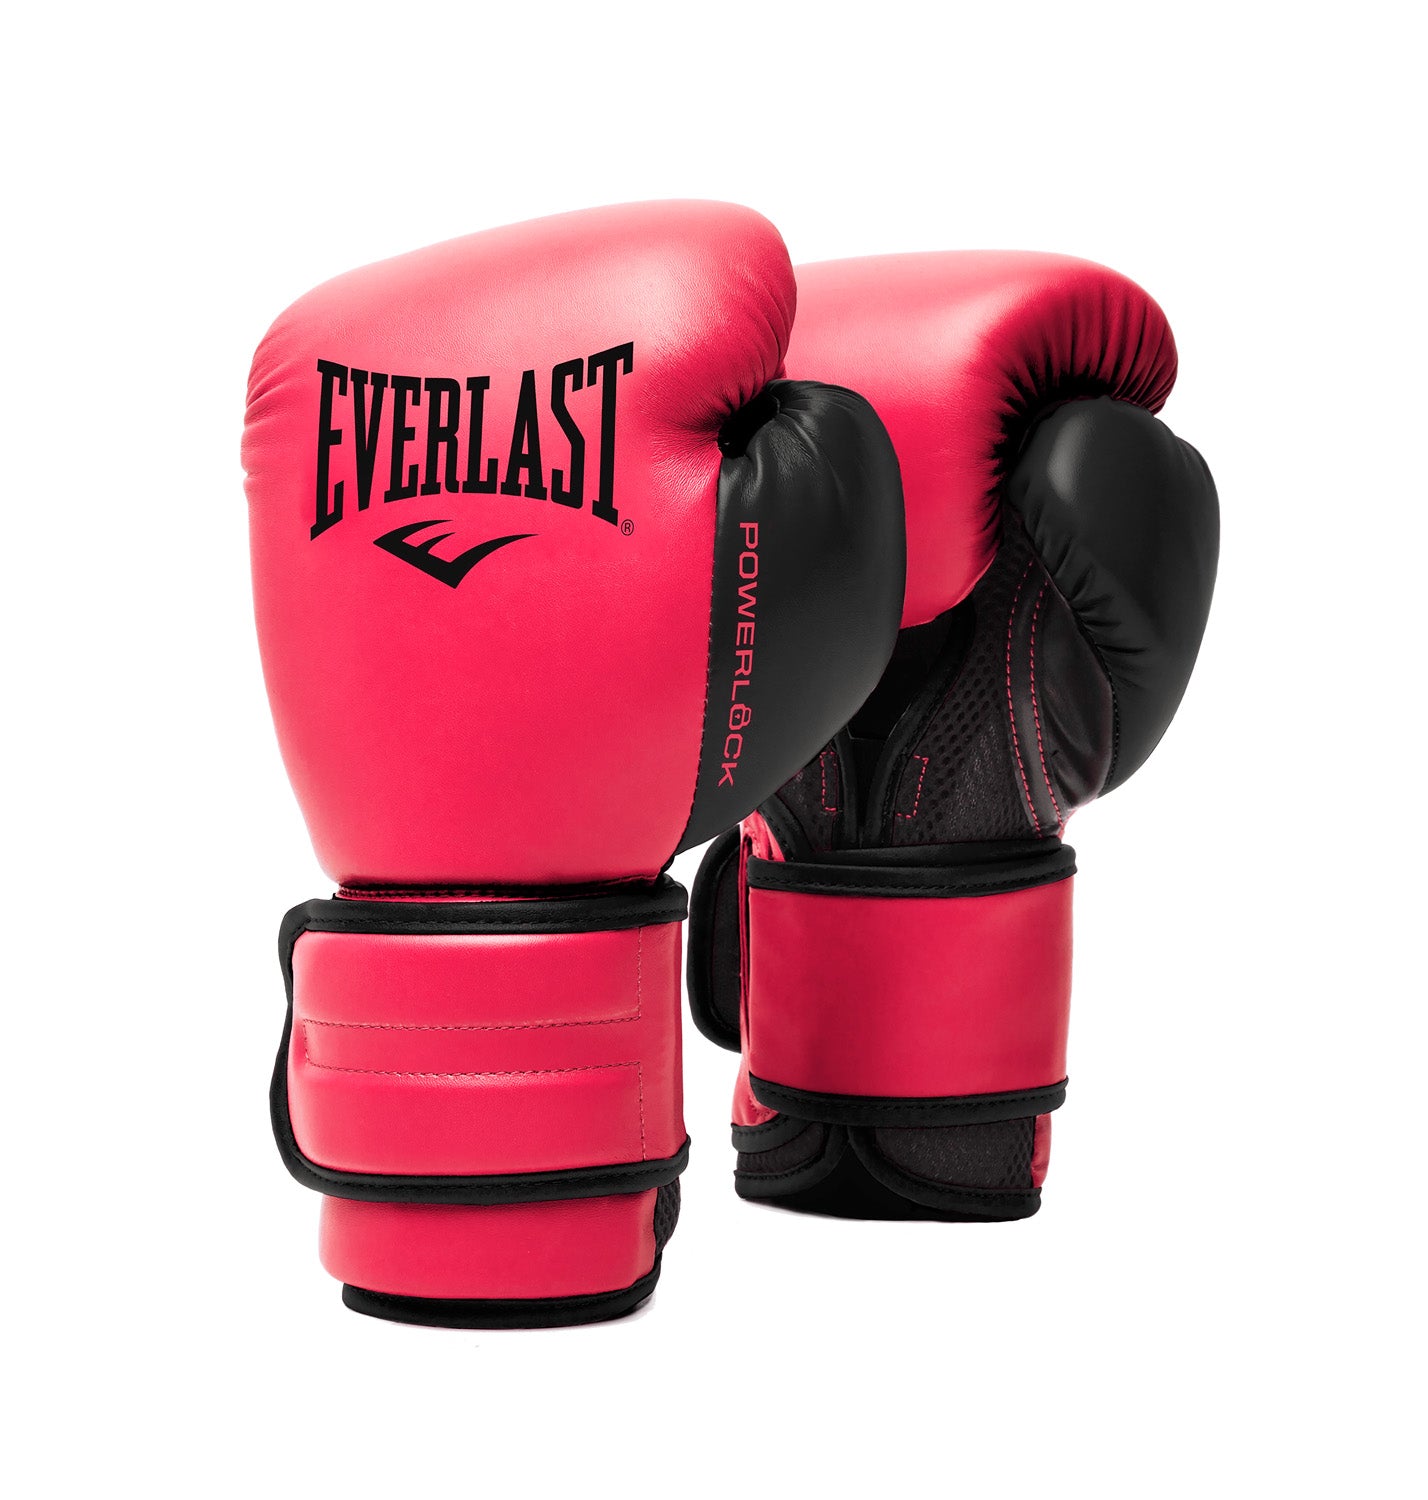 Everlast Australia - Workout with everlast. Available @kmart.  #everlastaustralia #boxing #fitness #kmartaus #train #activewear